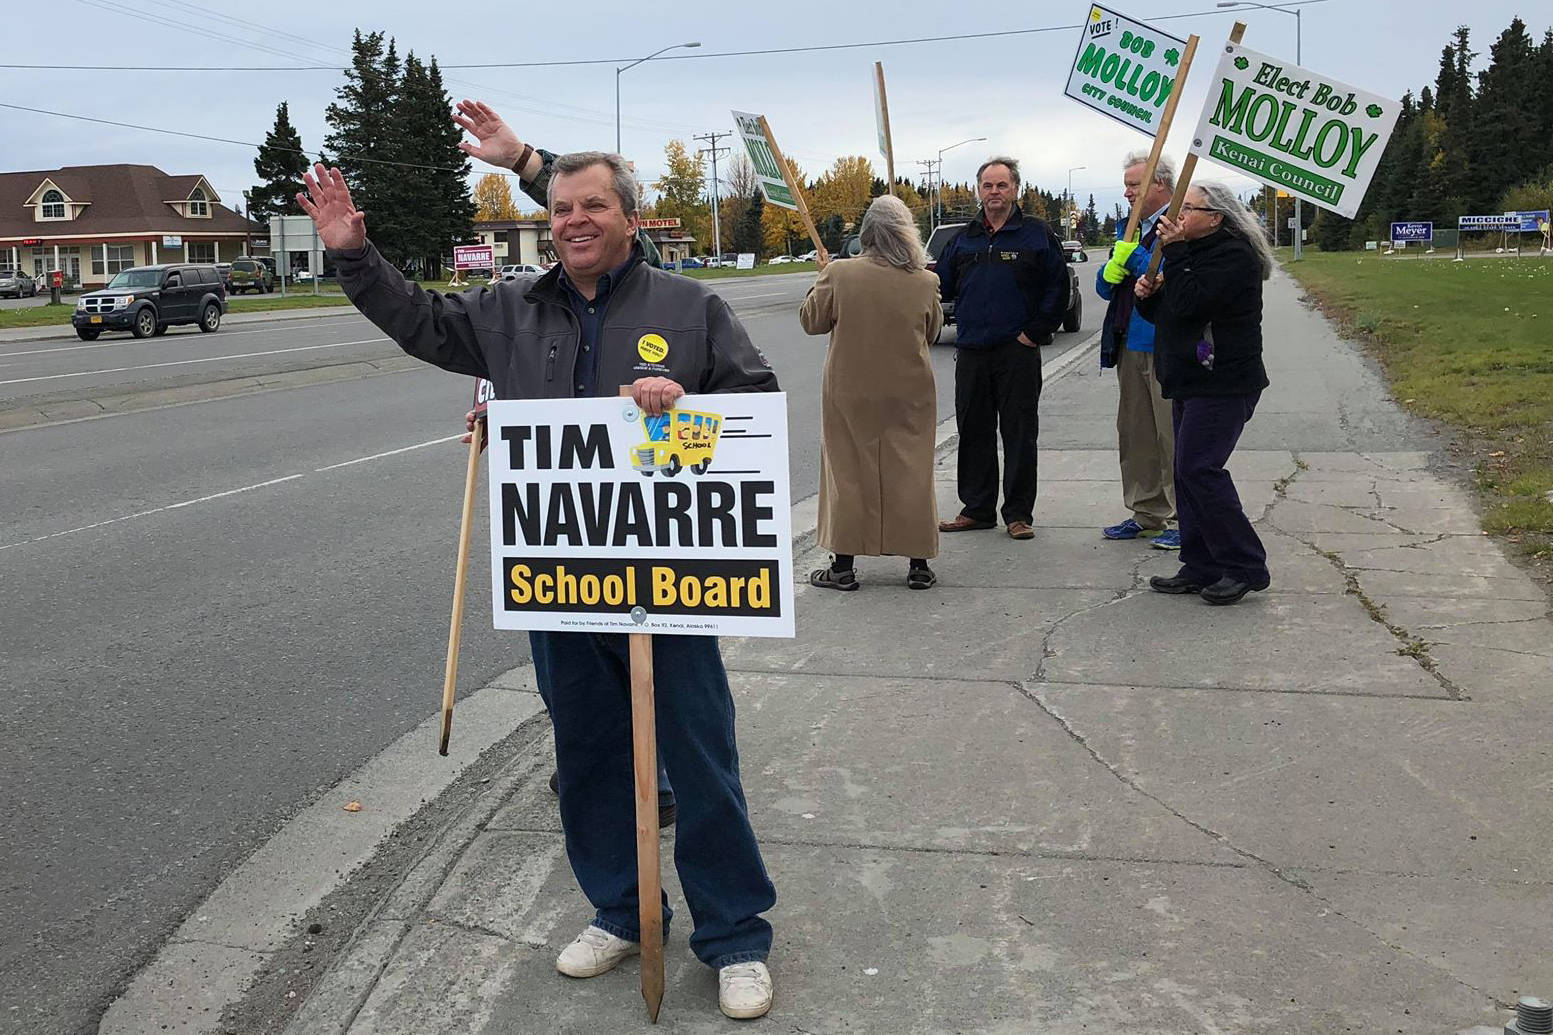 Kenai Peninsula Borough School Board member Tim Navarre campaigns for re-election along the Kenai Spur Highway on Tuesday, Oct. 2 in Kenai, Alaska.